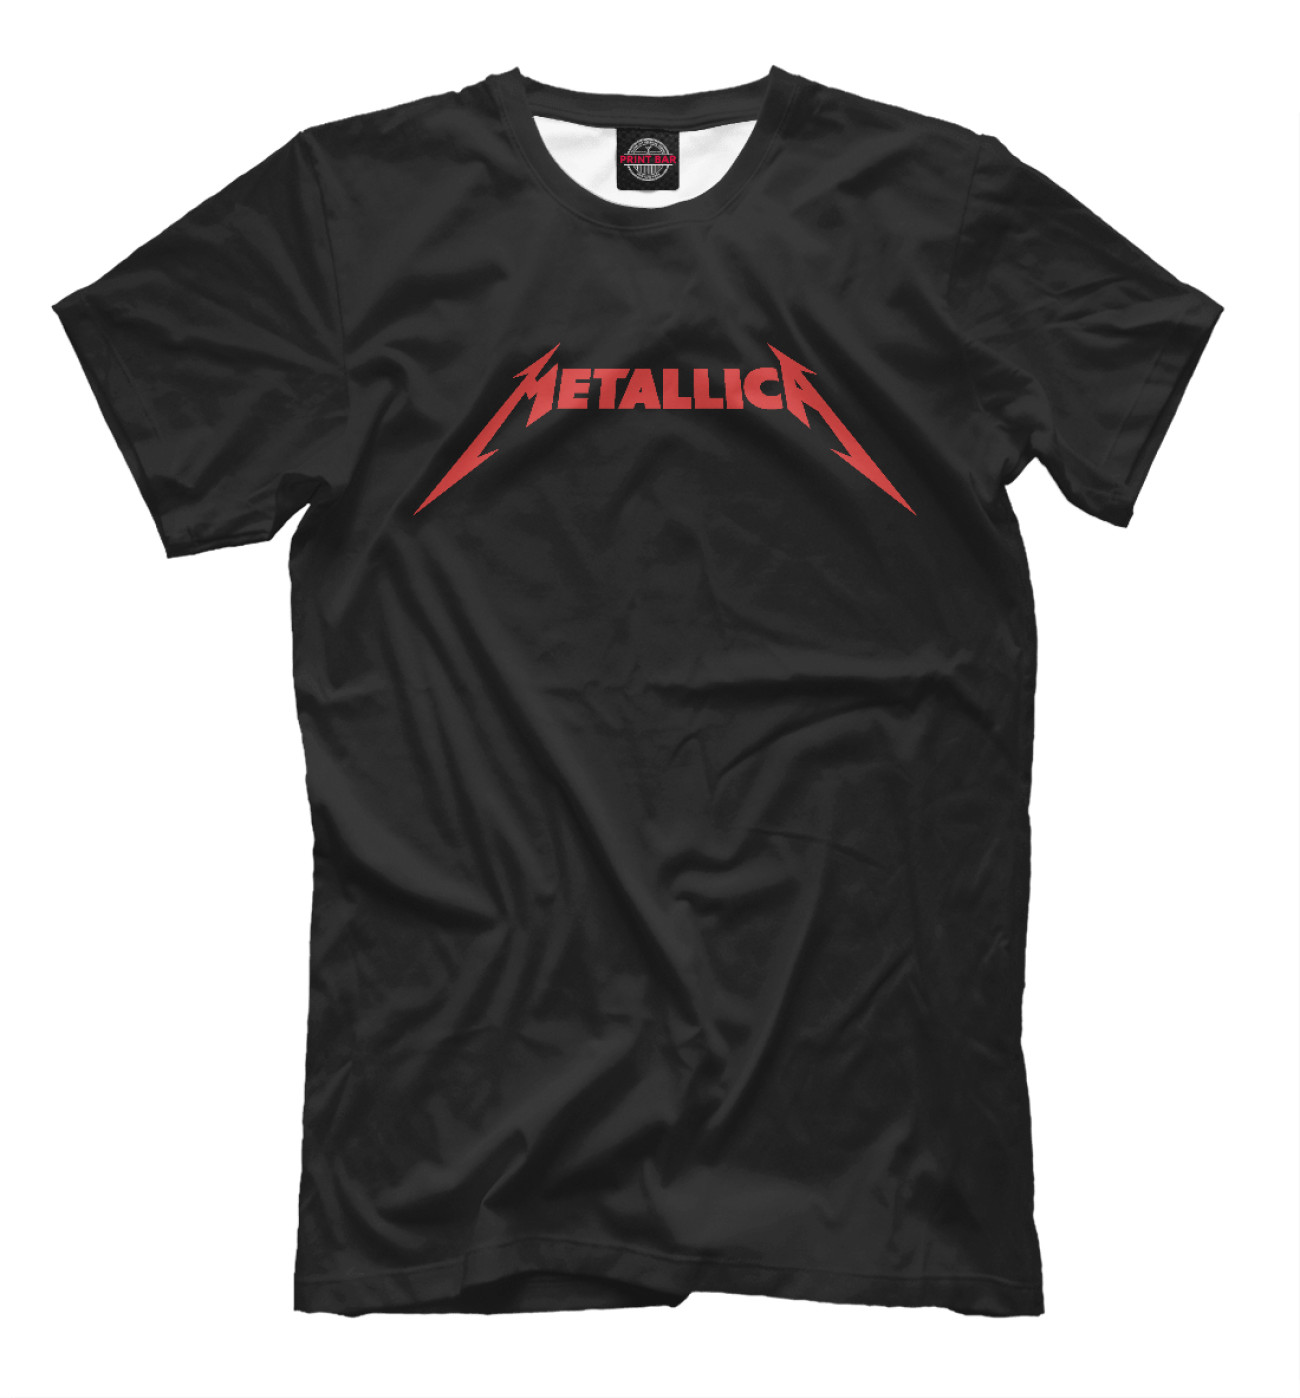 Мужская Футболка Metallica rock, артикул: MET-396067-fut-2